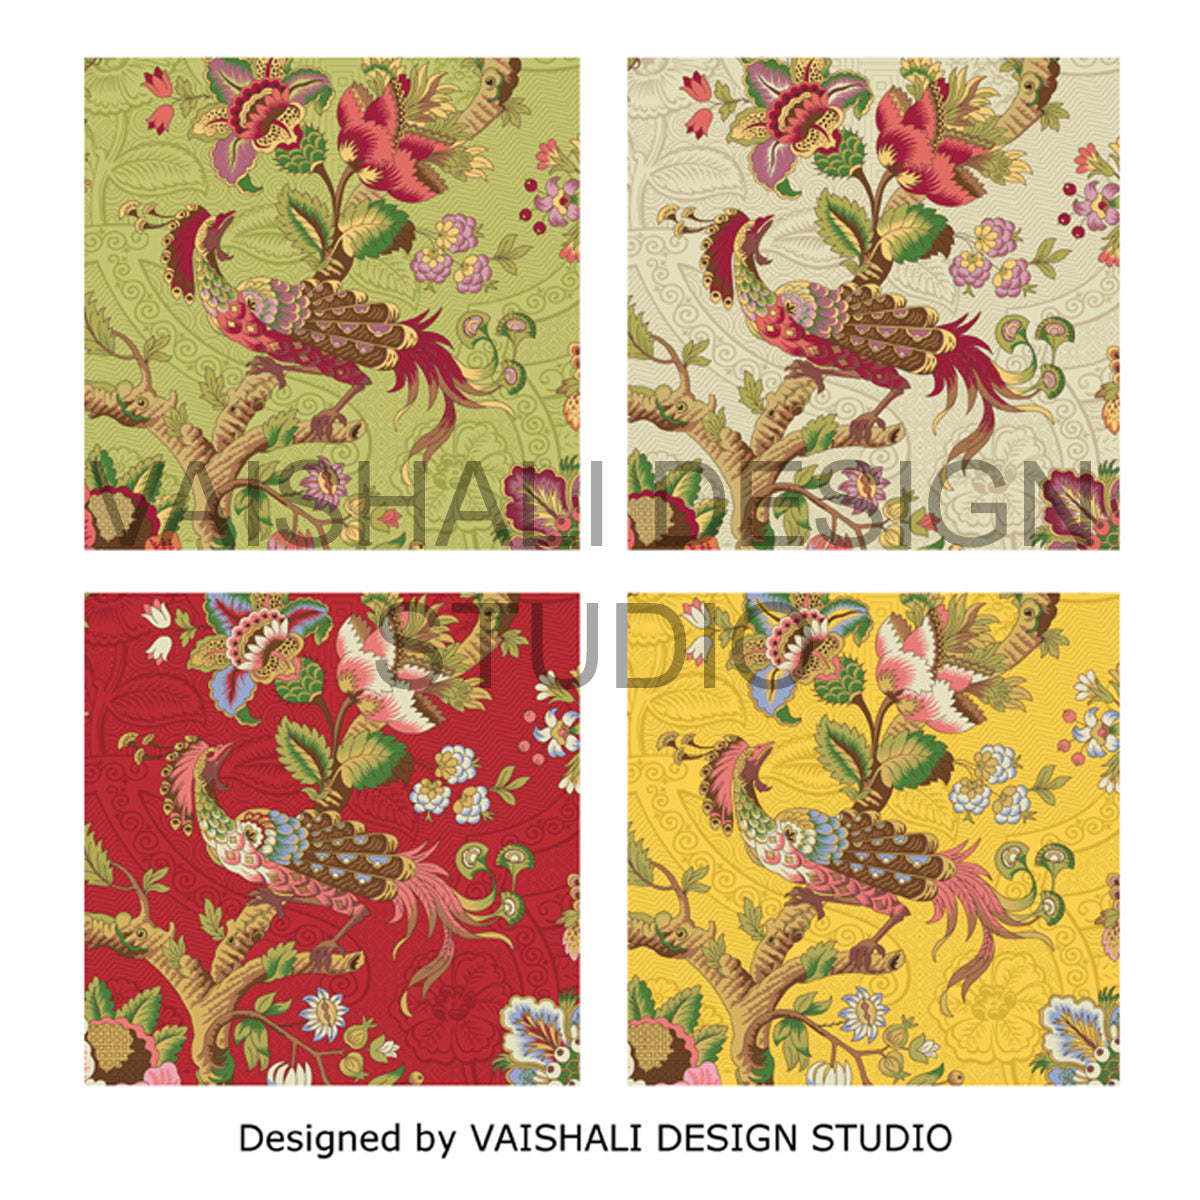 Persian patterns, printable coasters, set of 4 designs, 3.8" x 3.8"